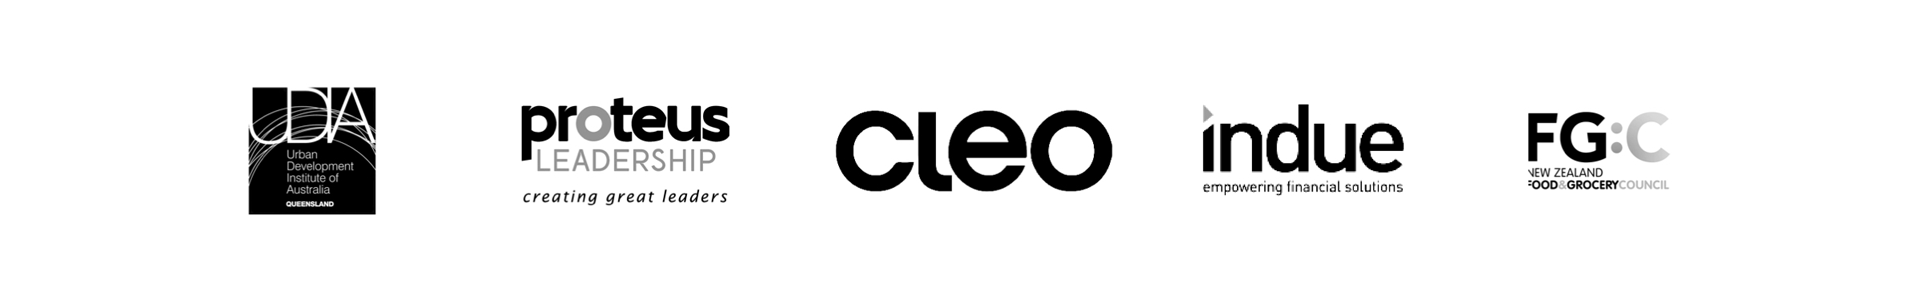 Client-Logos-005.png